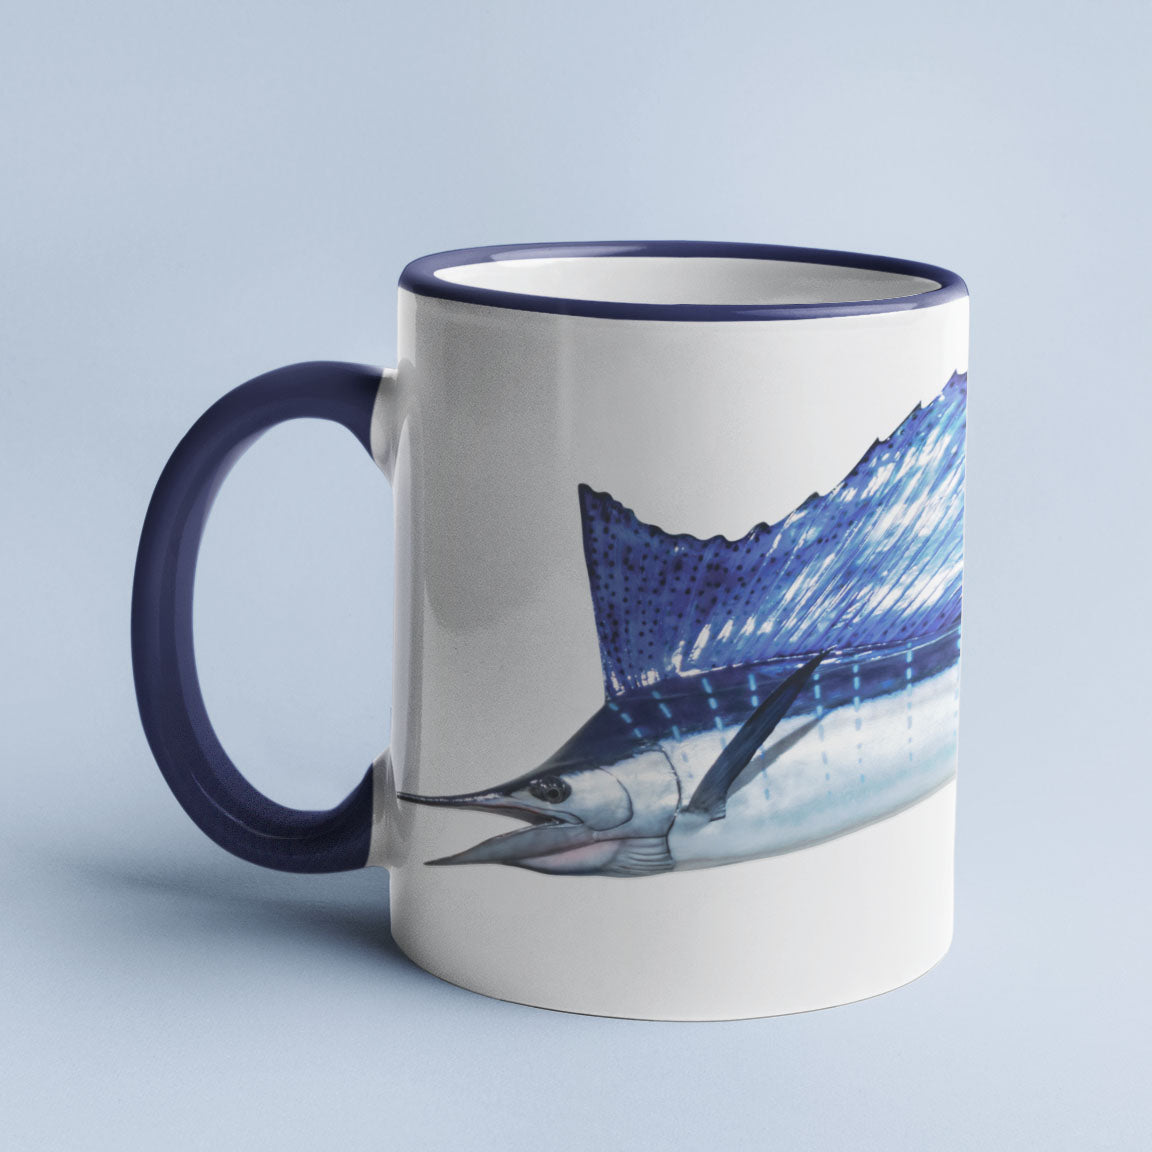 Sailfish accent mug with dark blue handle on light blue background.